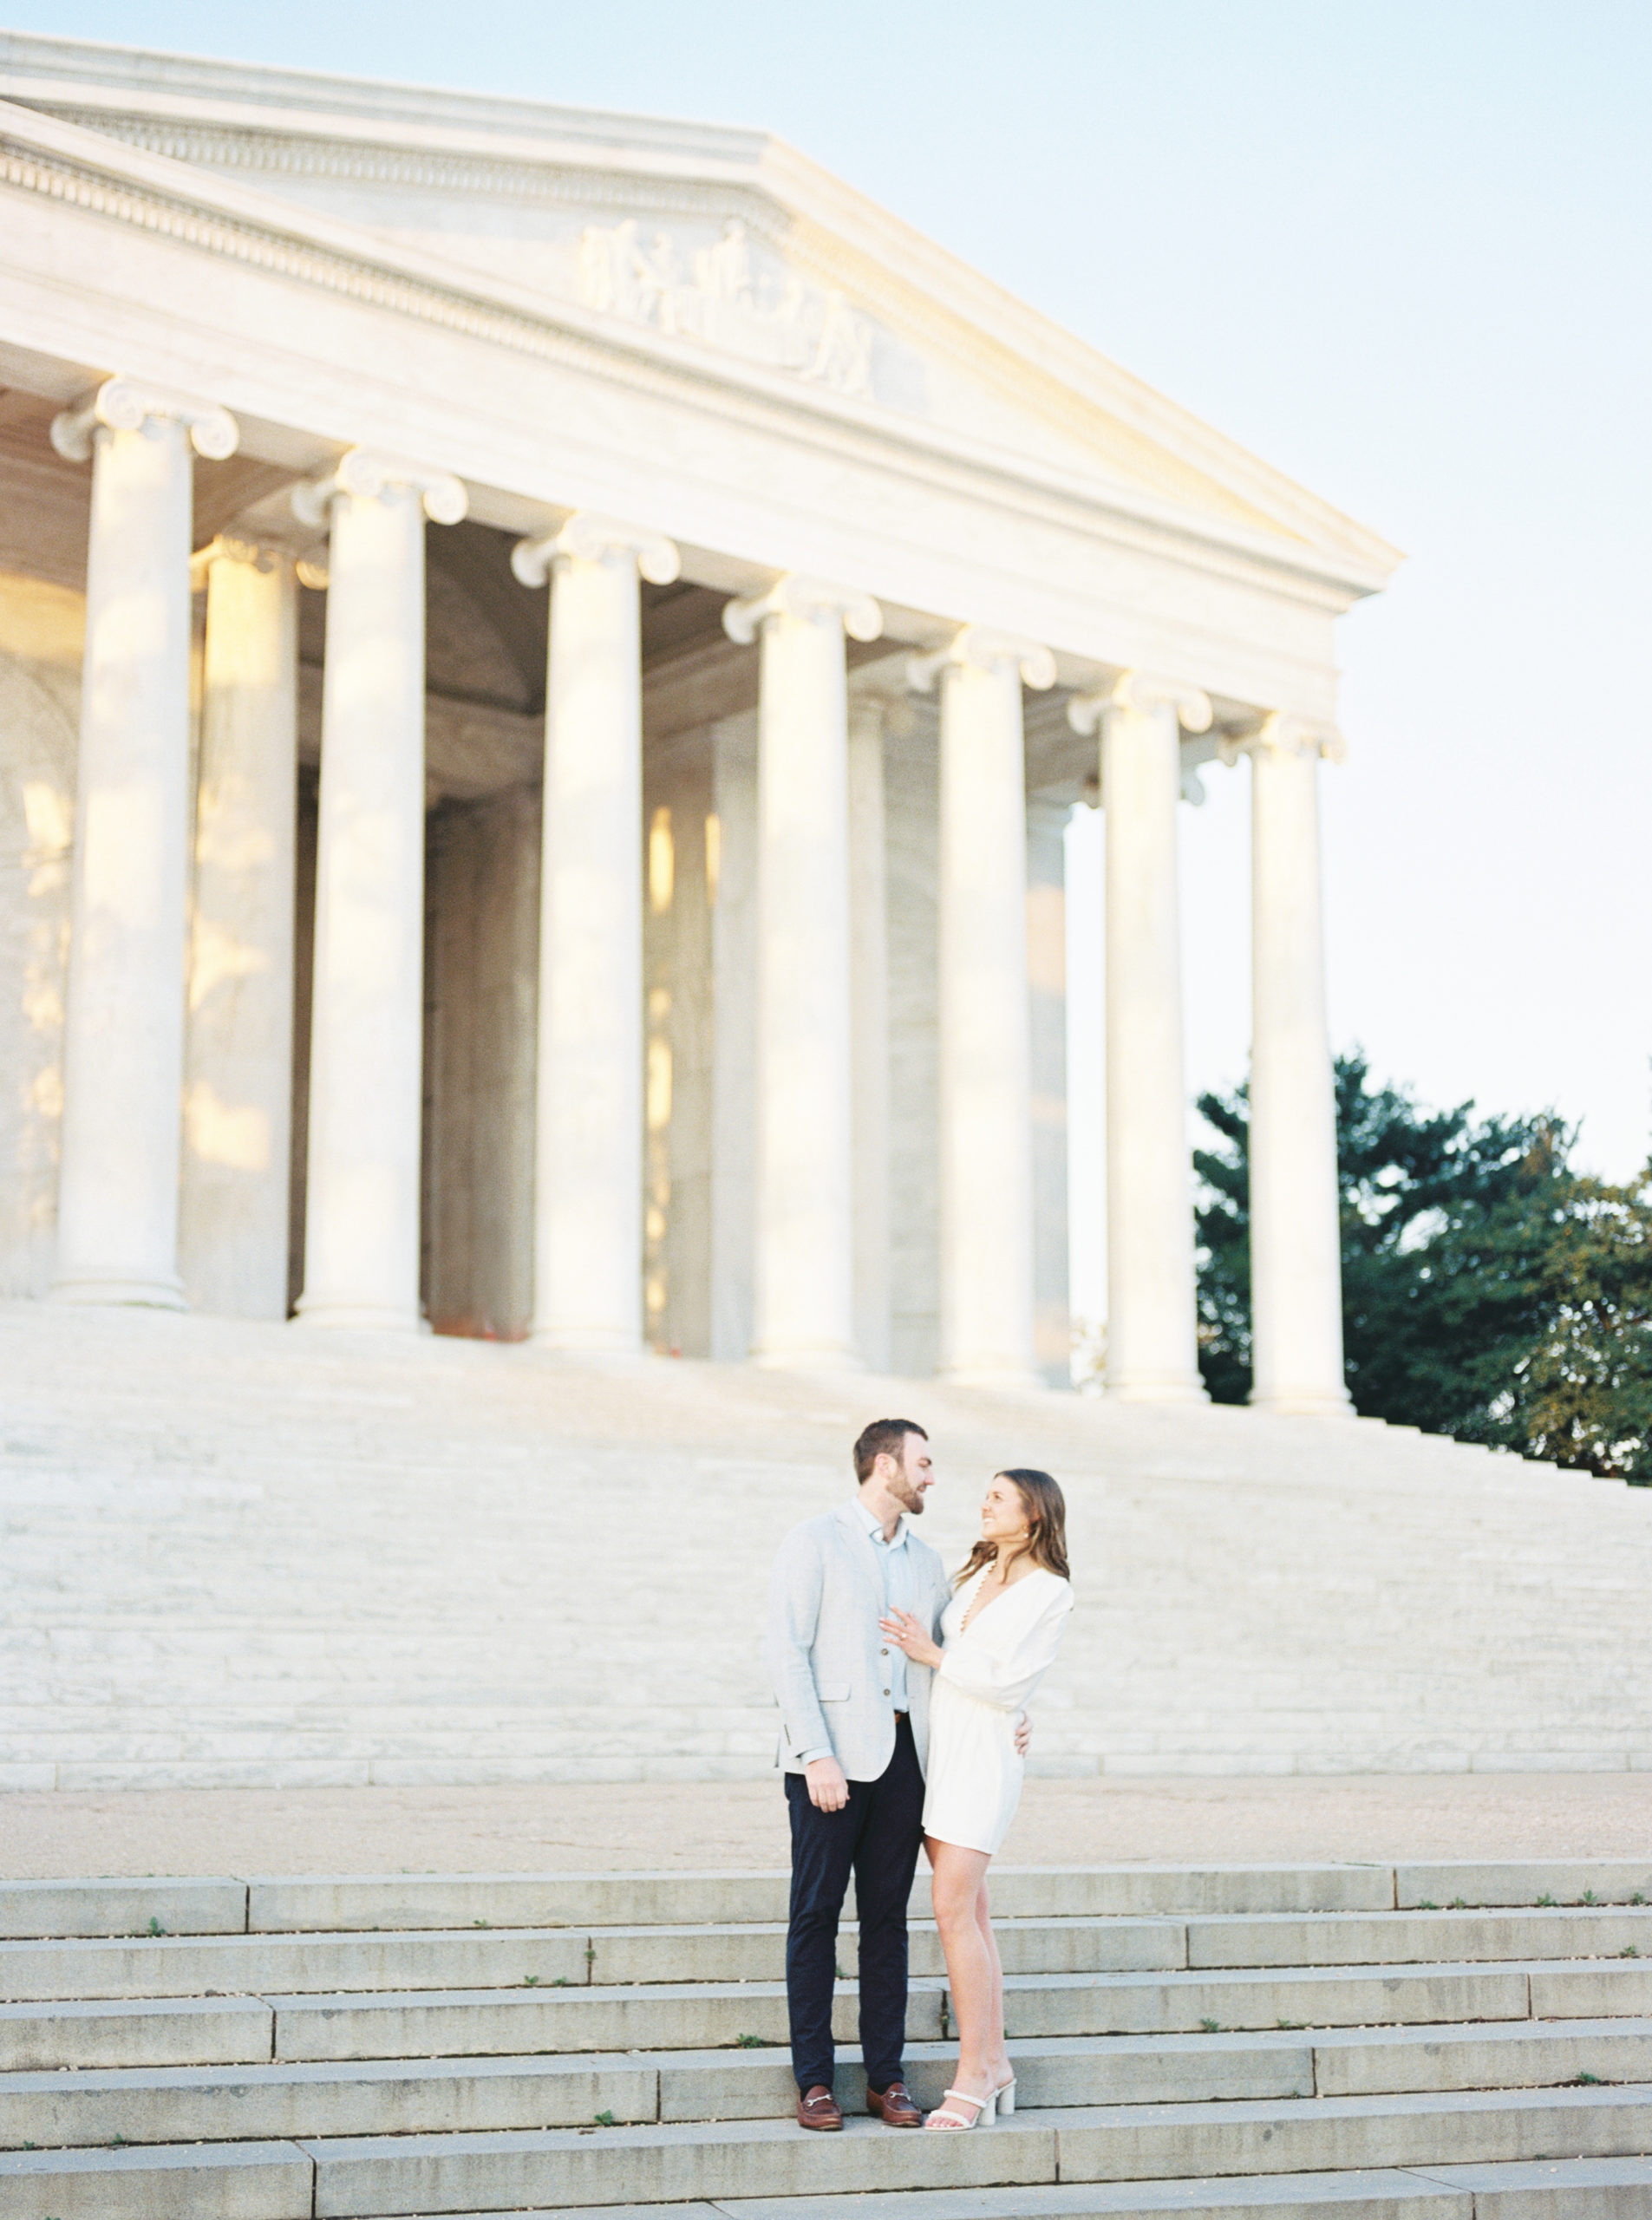 Sunrise engagement at the Thomas Jefferson Memorial Washington DC